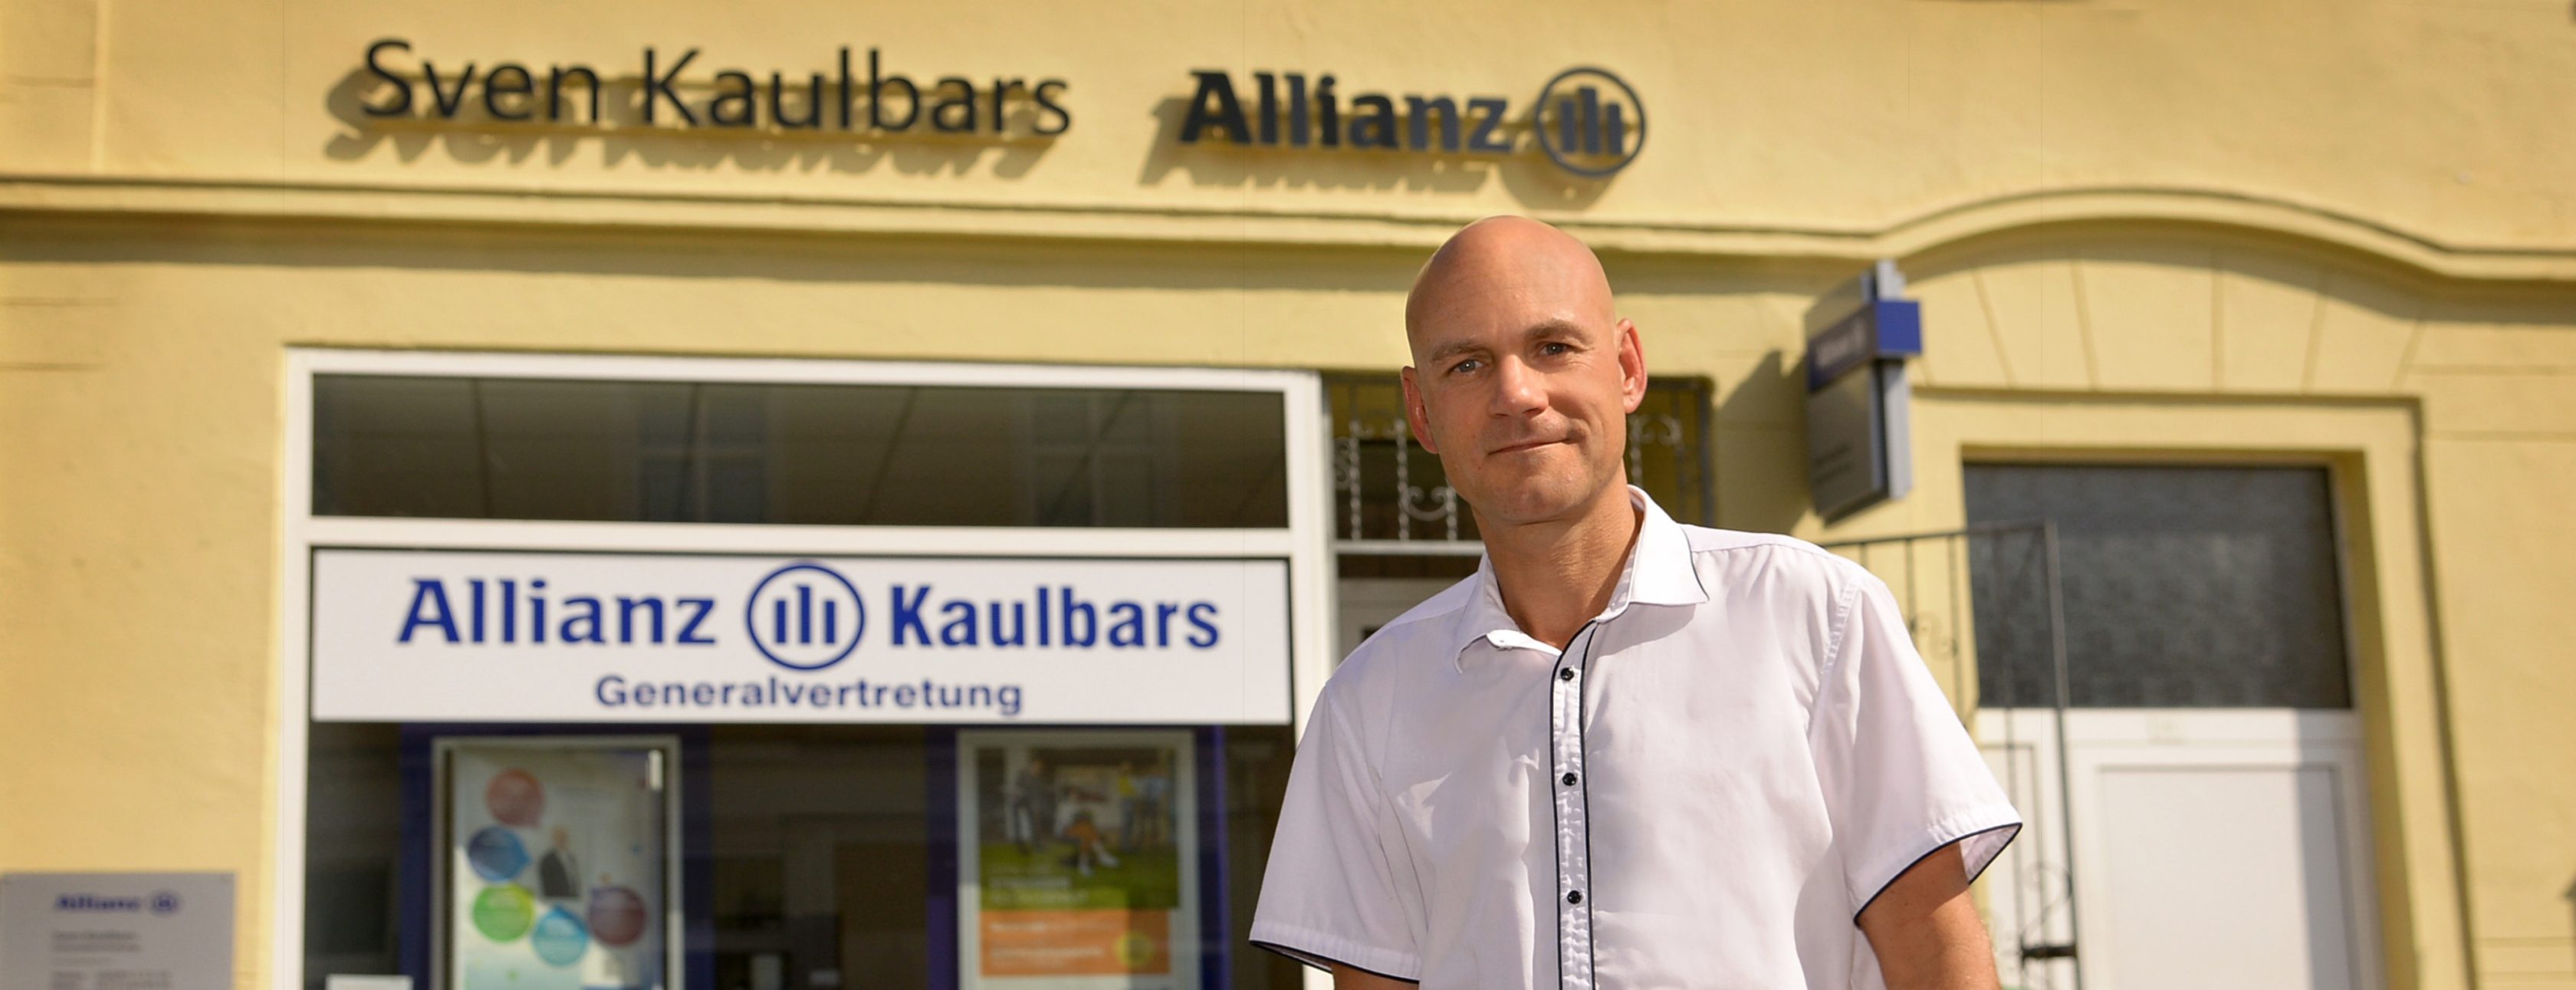 Allianz Versicherung Sven Kaulbars Calbe Saale - Sven Kaulbars